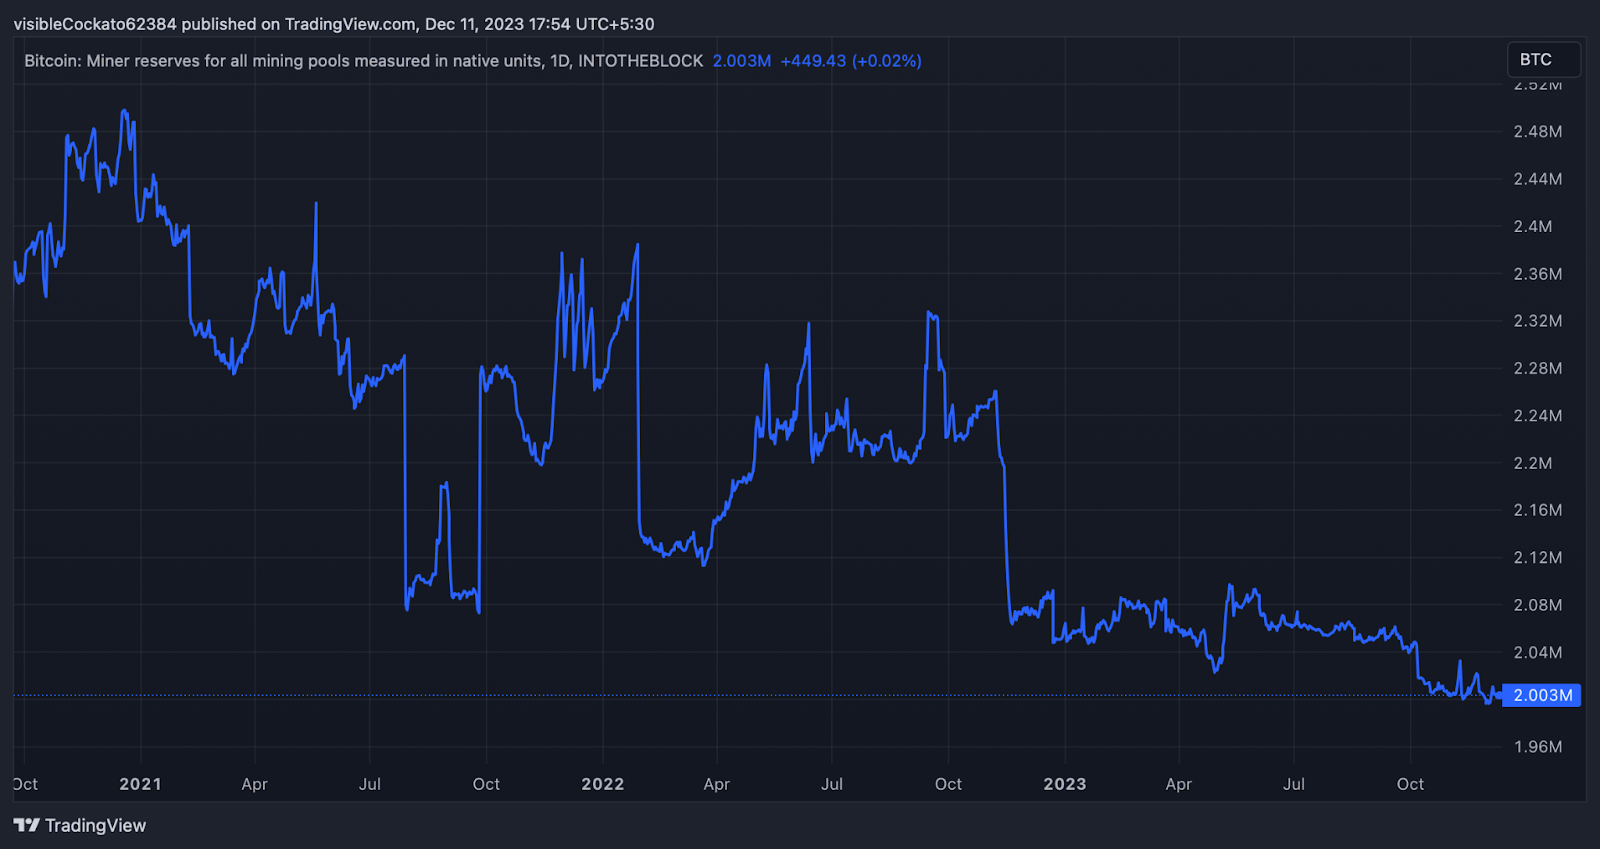 Why did the crypto market drop amid the bull run? - 2